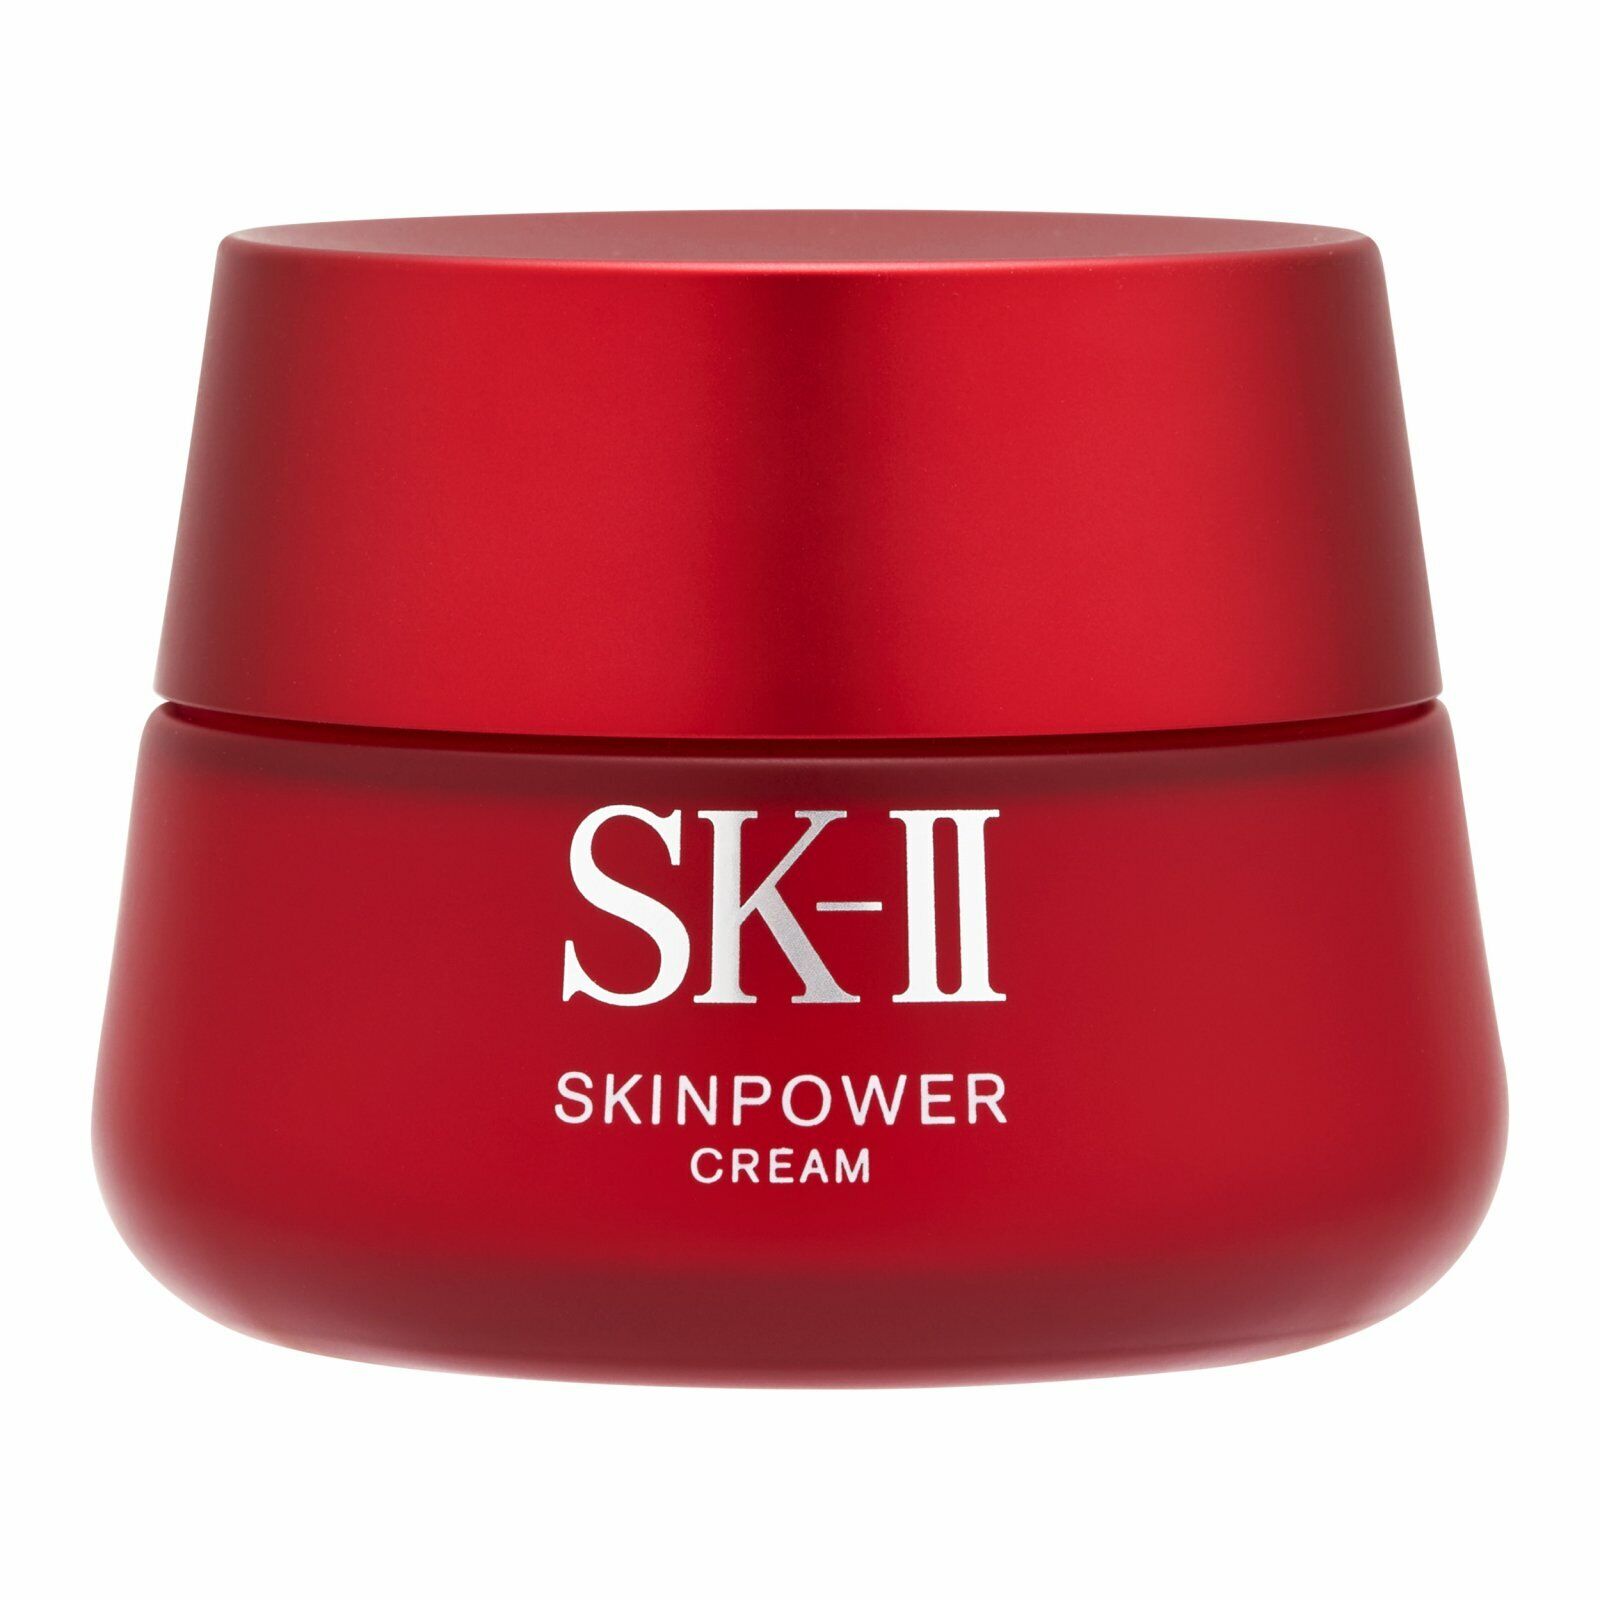 SK-II Skinpower Cream 80g PITERA SKIN POWER ANTI-AGING NEW SKII SK2 Japan